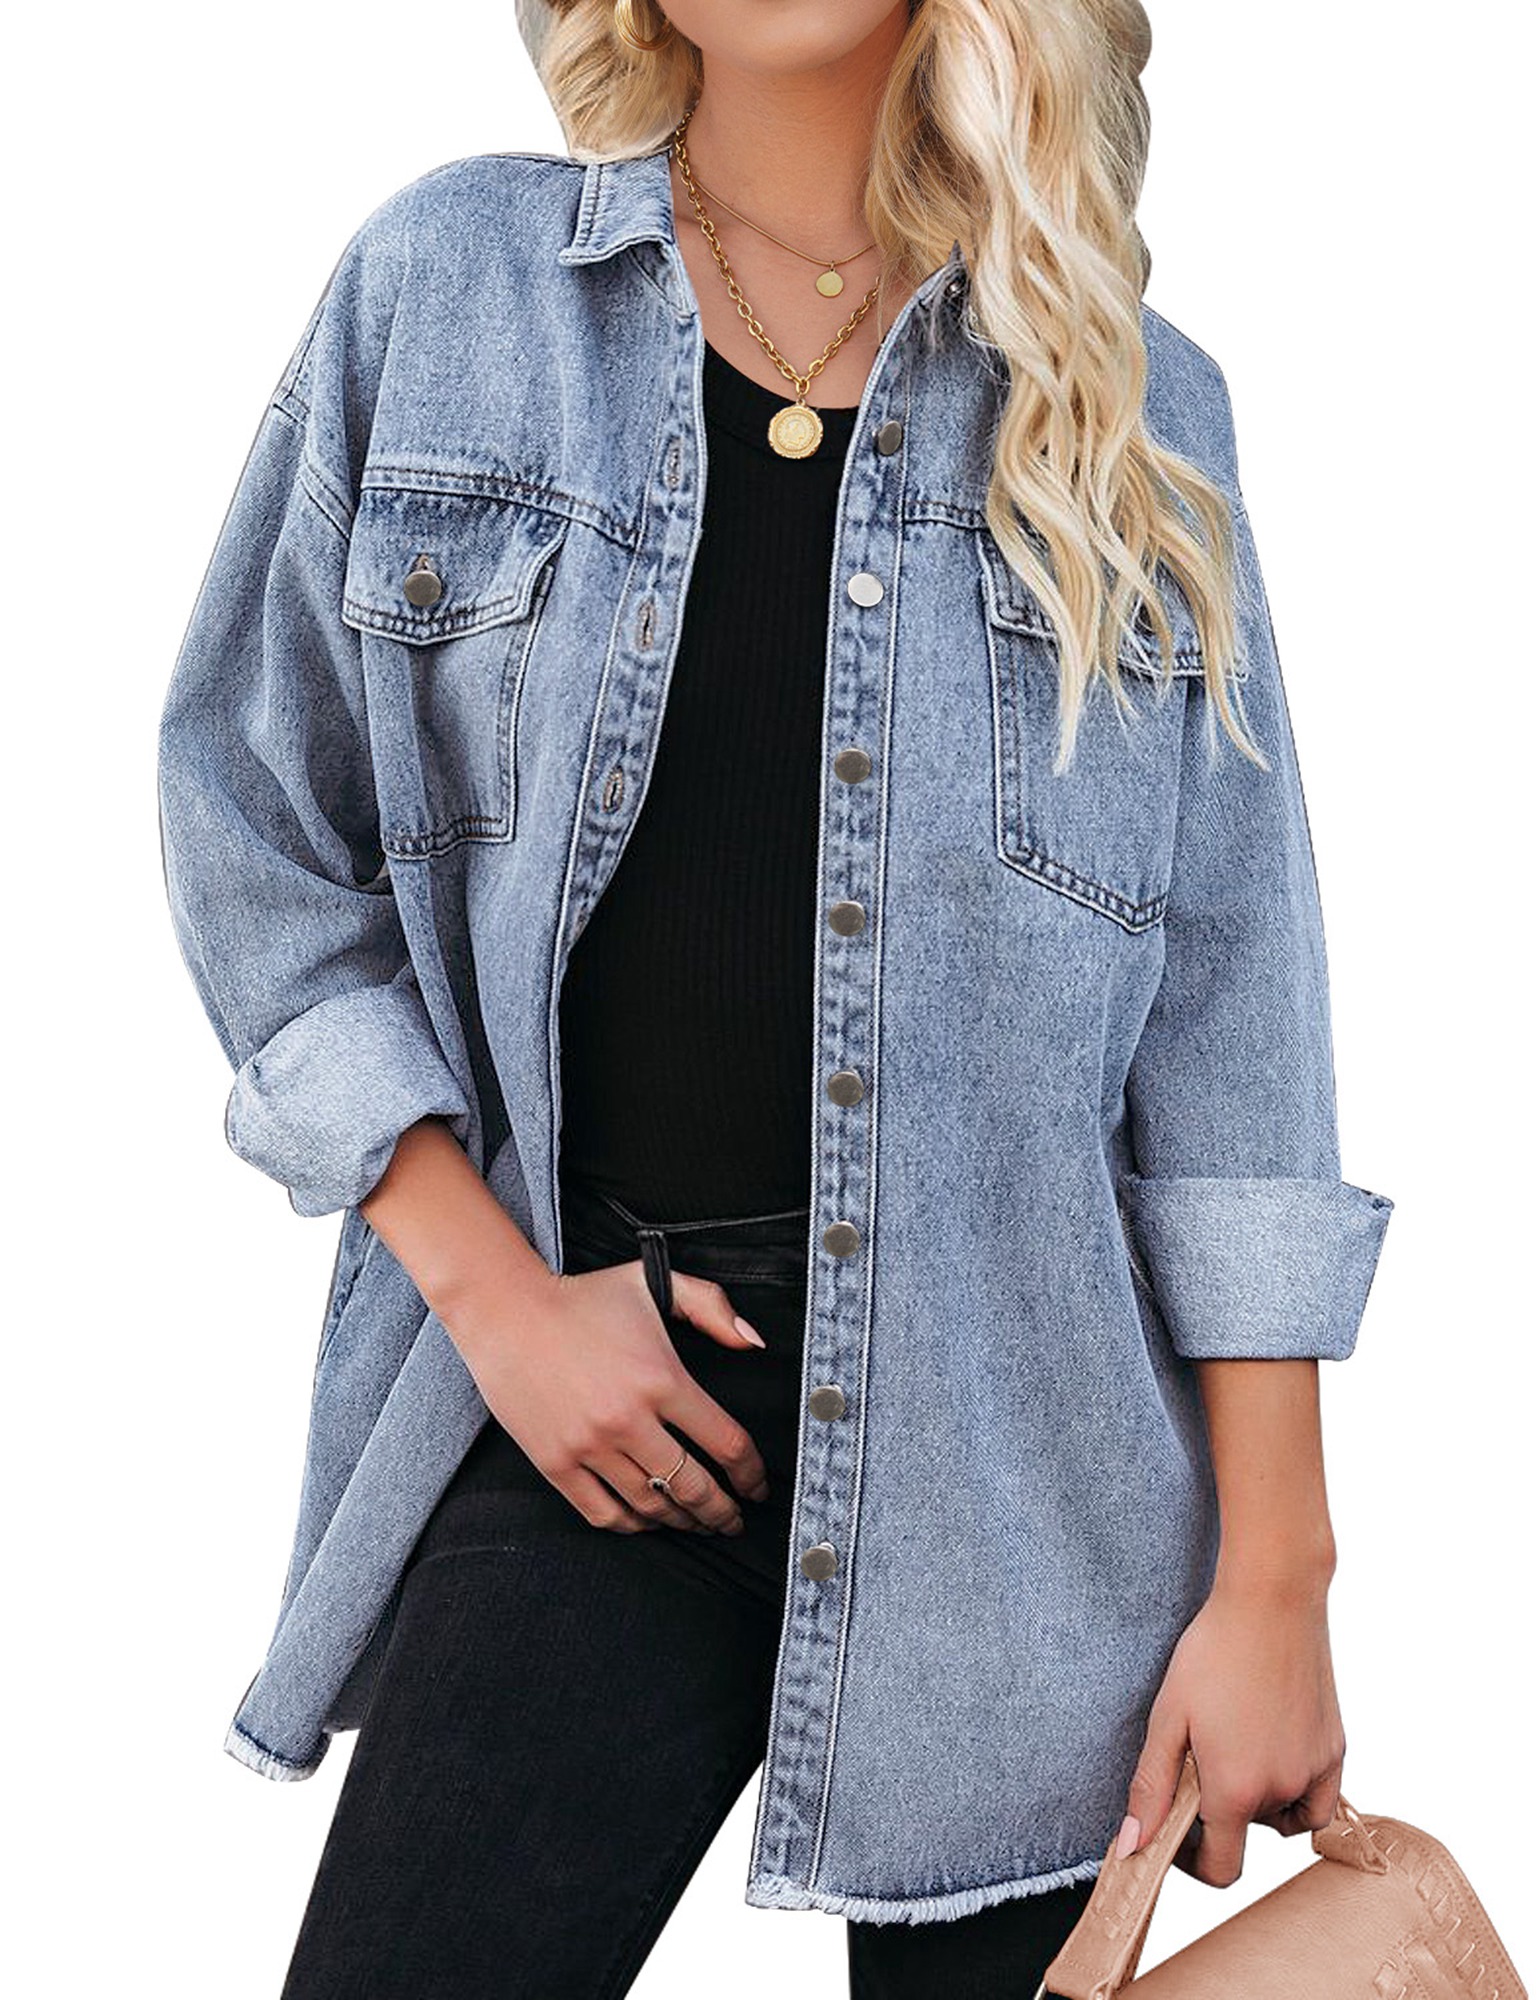 Luvamia Denim Jacket for Women Long Sleeve Boyfriend Jean Jacket Loose Coat, XL, Fit Size 16-18 - image 1 of 7